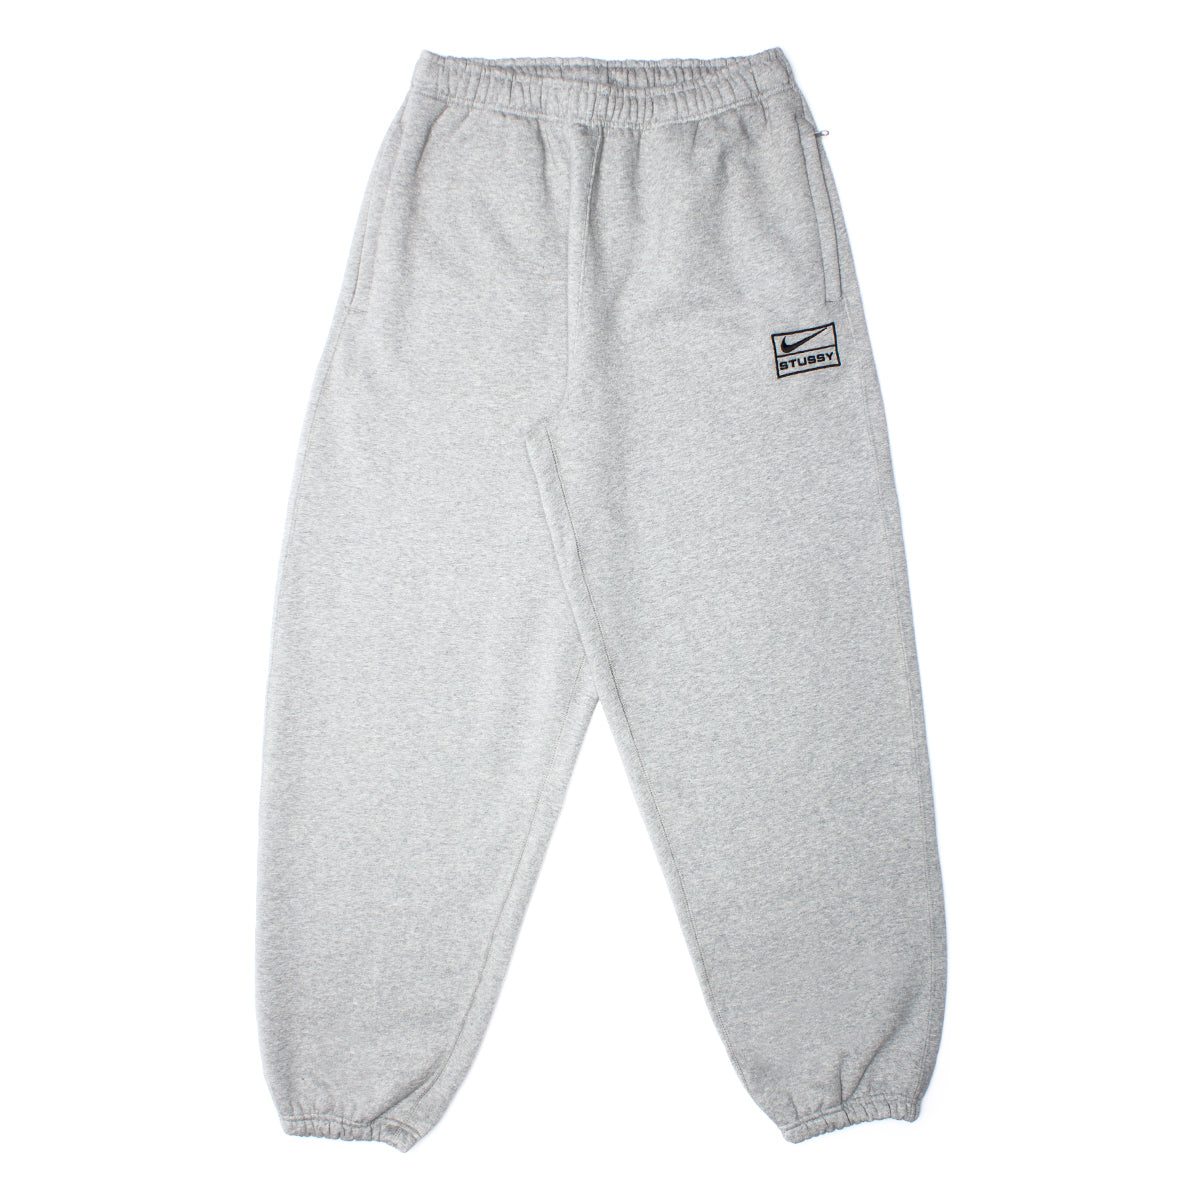 Nike x Stussy Washed Fleece Pant Style # DO9340-063 Color : DK Heather Grey